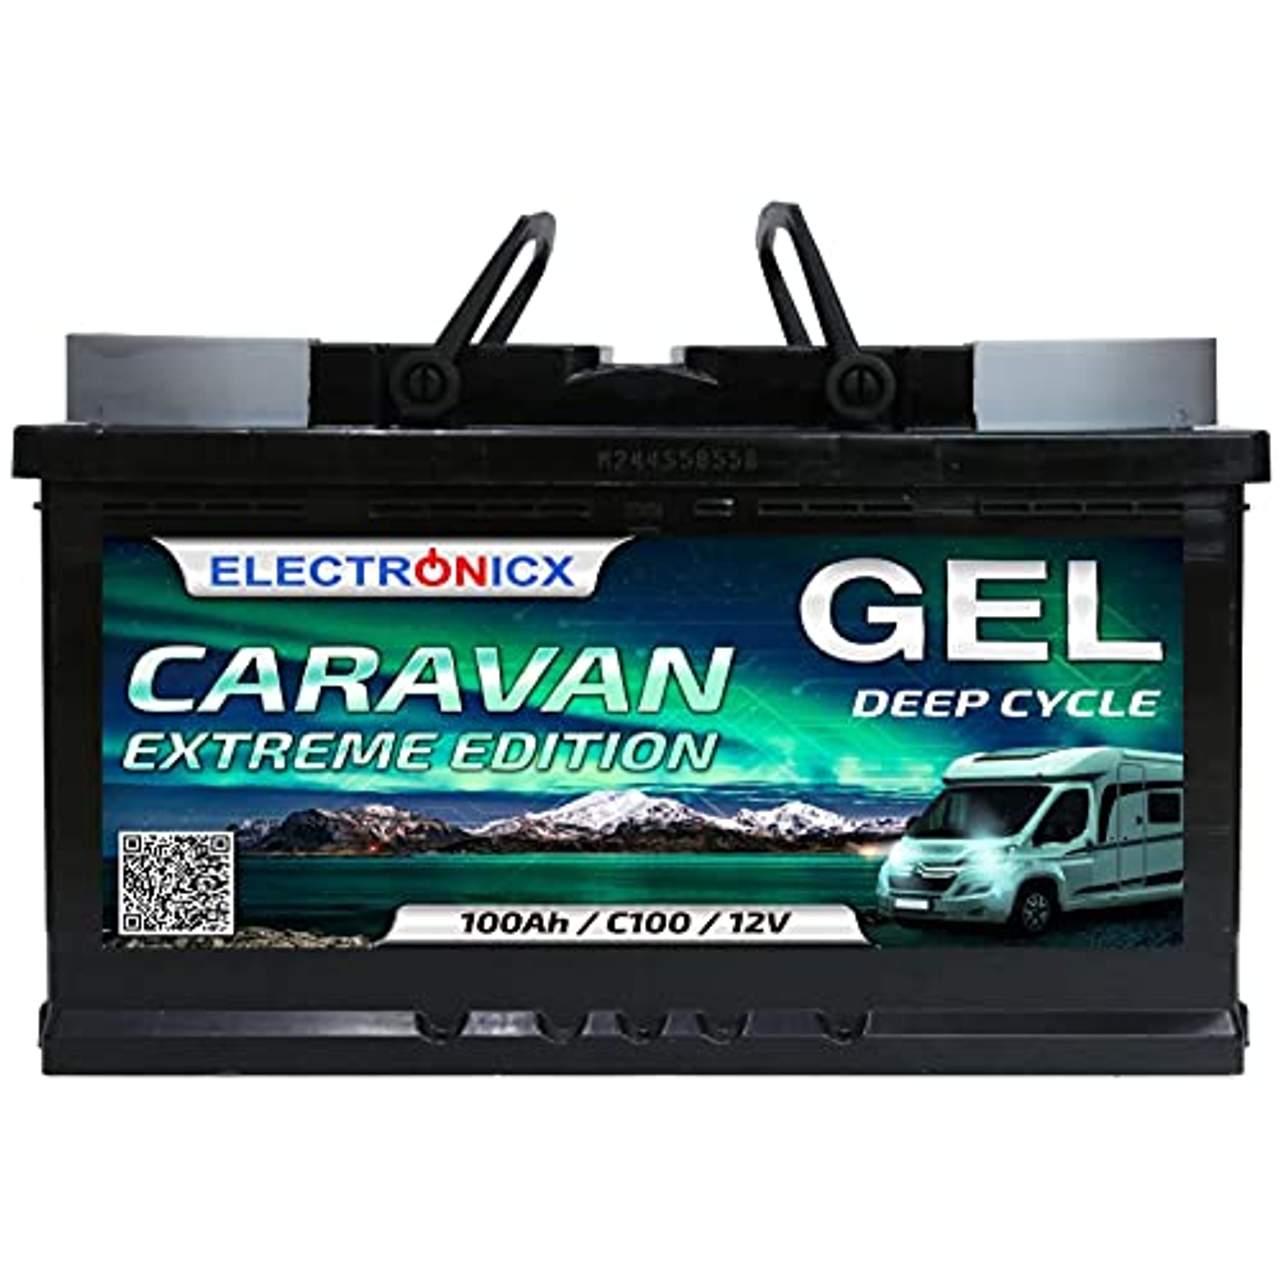 GEL Batterie 12v 100Ah Electronicx Caravan Extreme Edition Solarbatterie